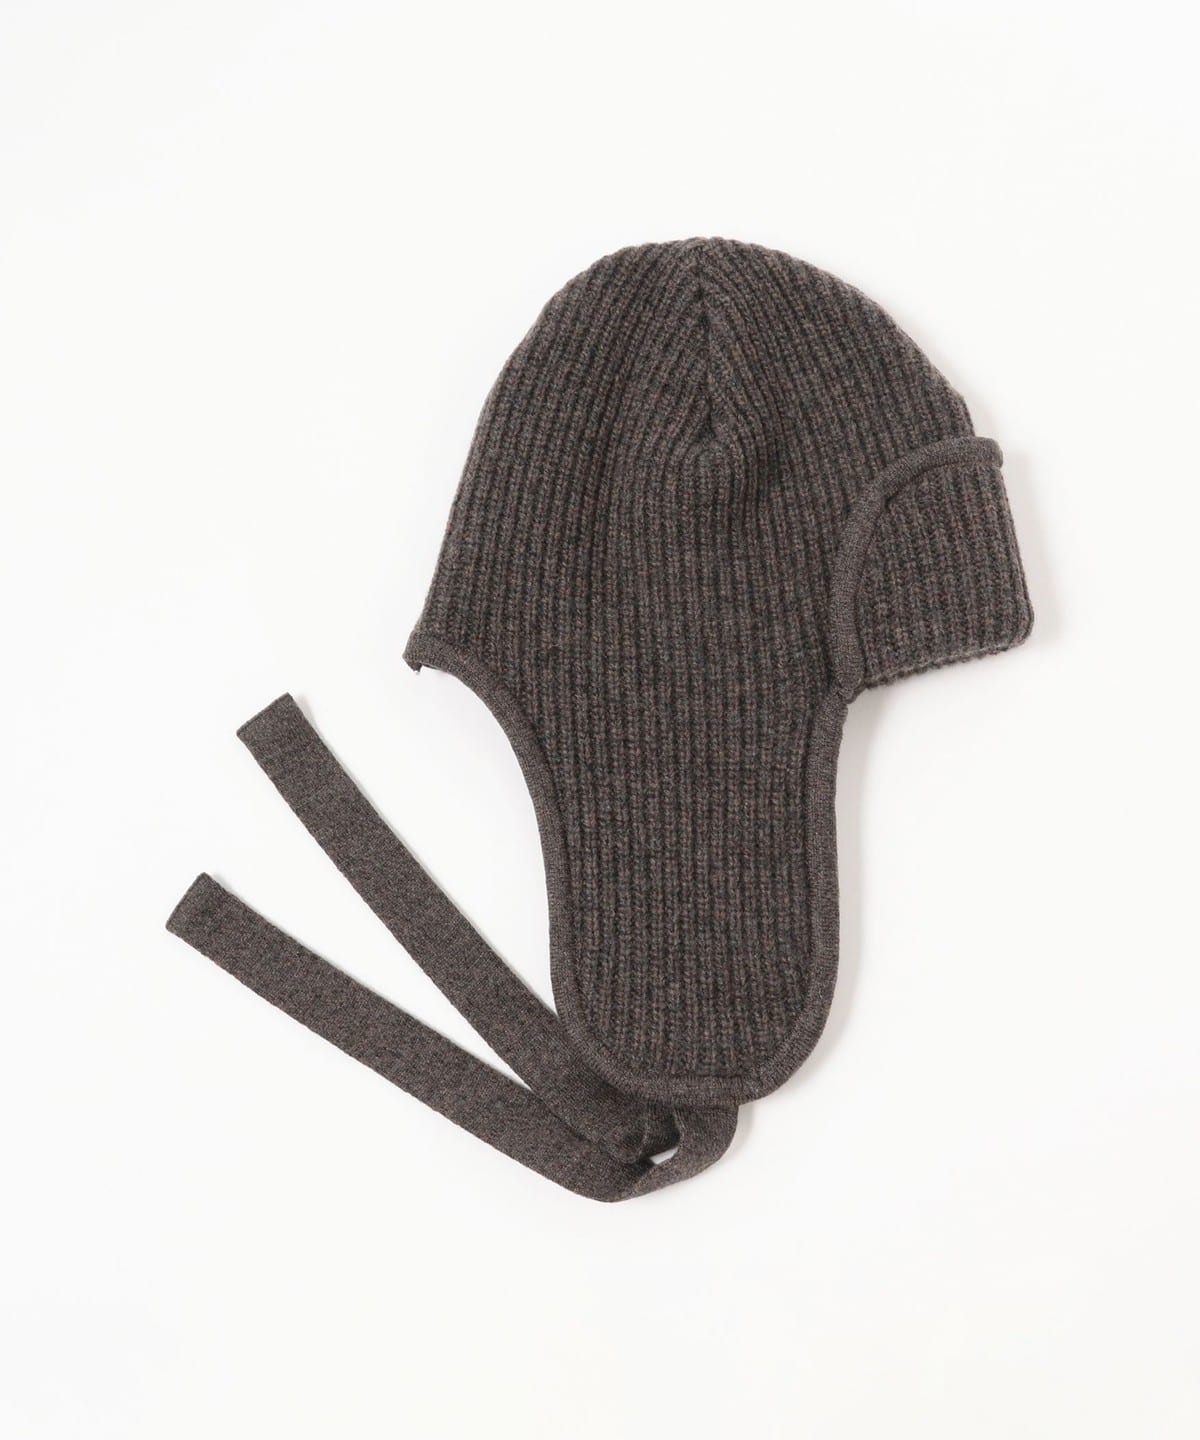 Ray BEAMS Ray BEAMS FUMIE=TANAKA / Ear cover cap (hat knit cap 